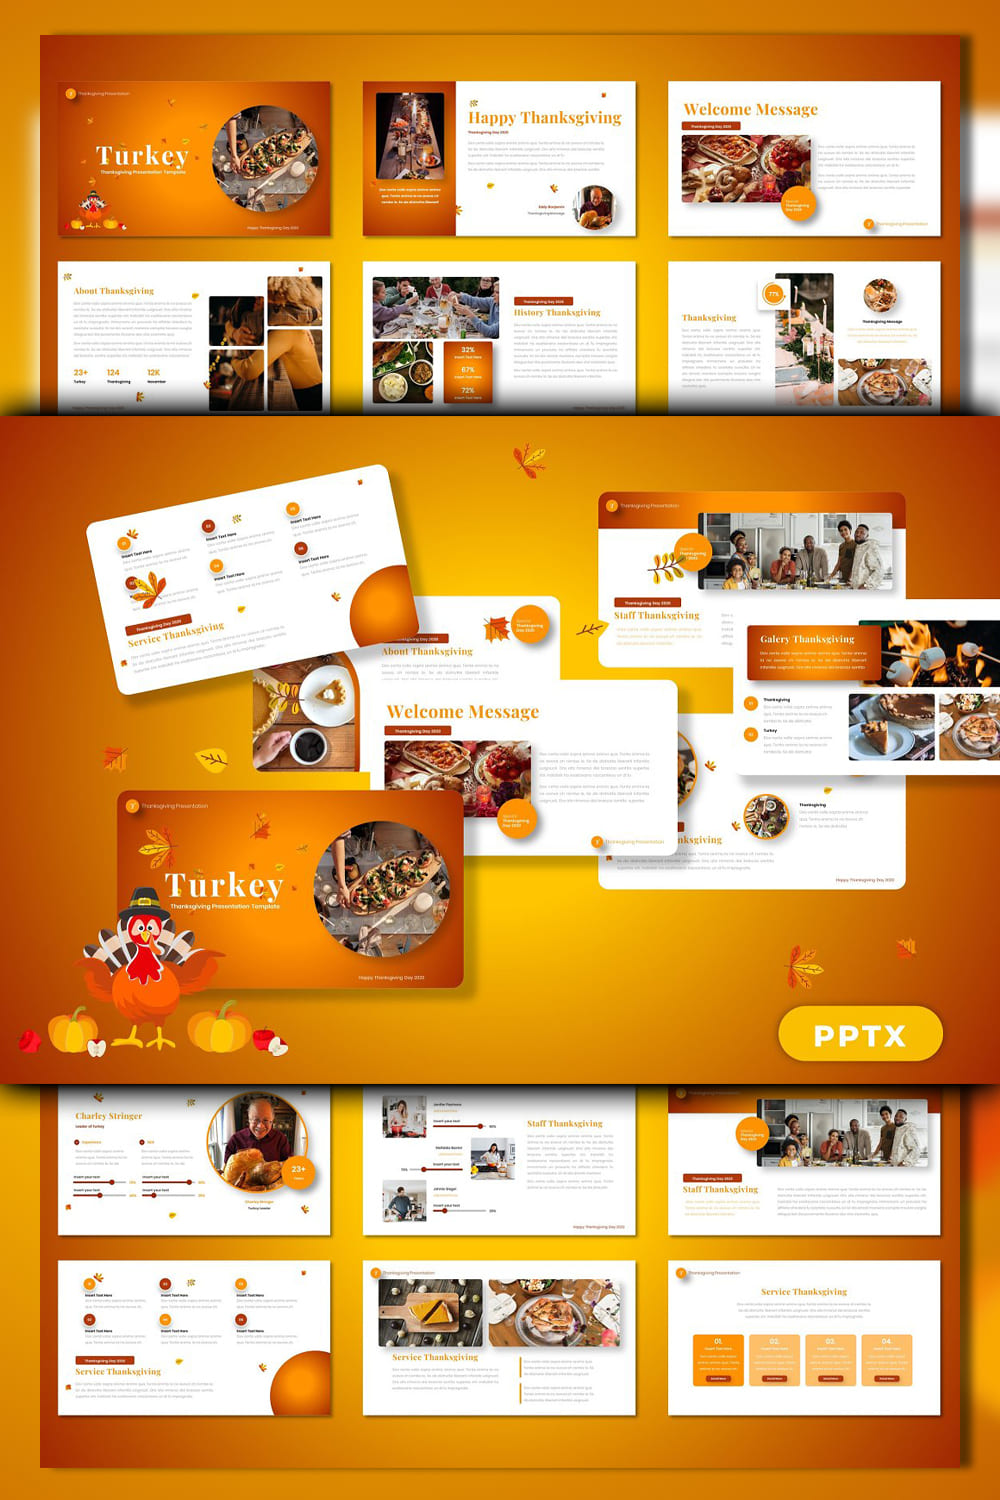 Turkey - Thanksgiving PowerPoint pinterest image.